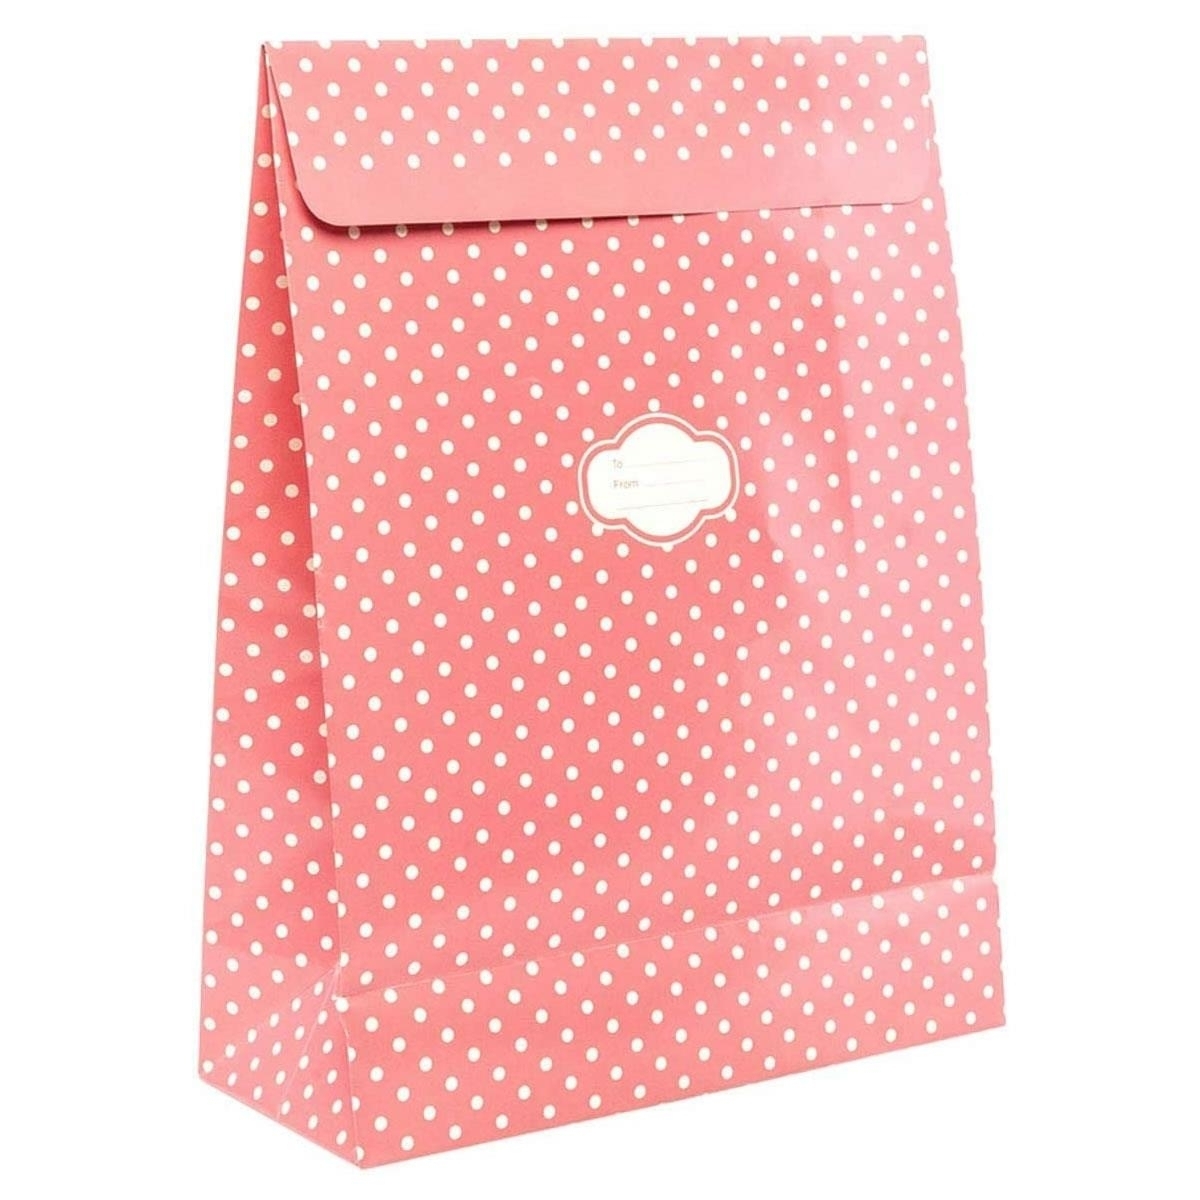 Pressie Pouch Peel & Seal Gift Bag Pink Polka Dots 12pk Medium No-Wrap Present